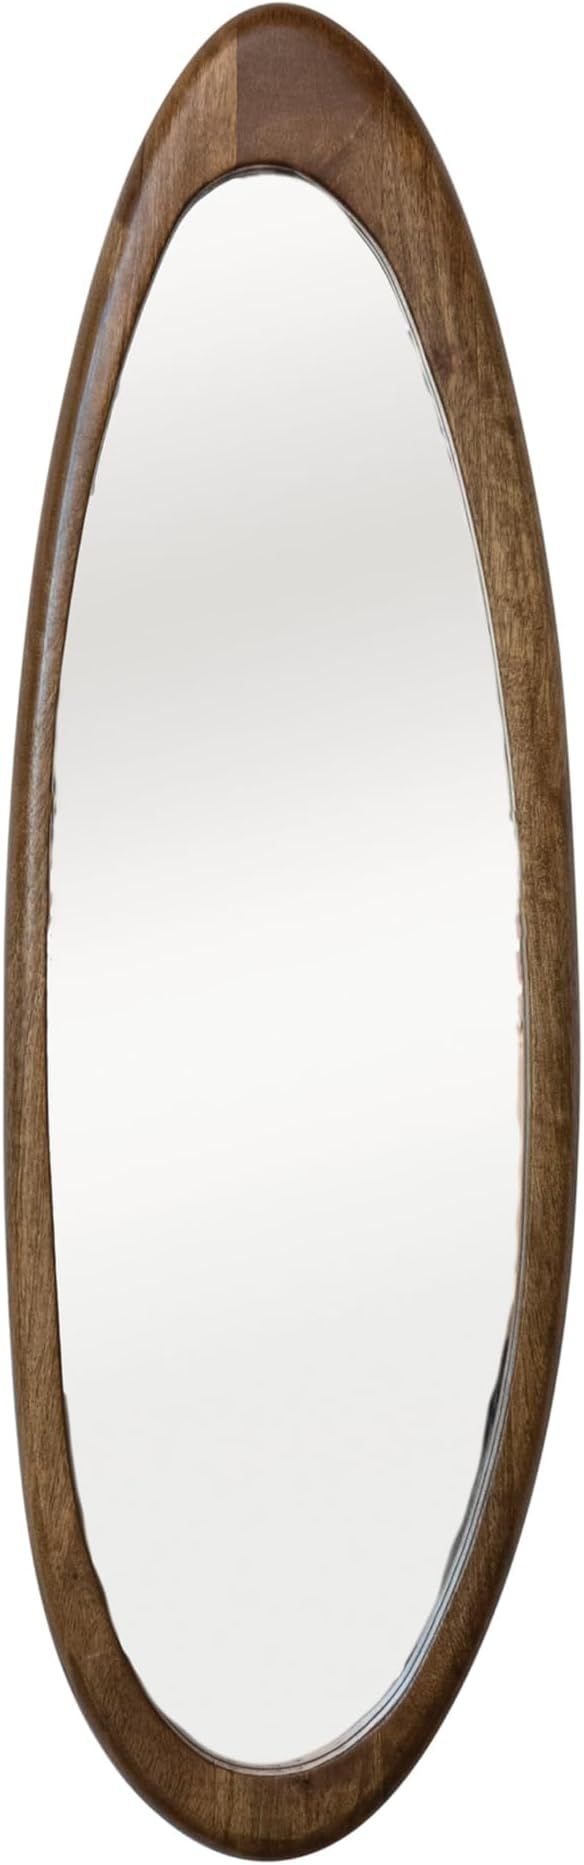 Bloomingville Oval Mango Wood Framed Wall Mirror, Natural | Amazon (US)